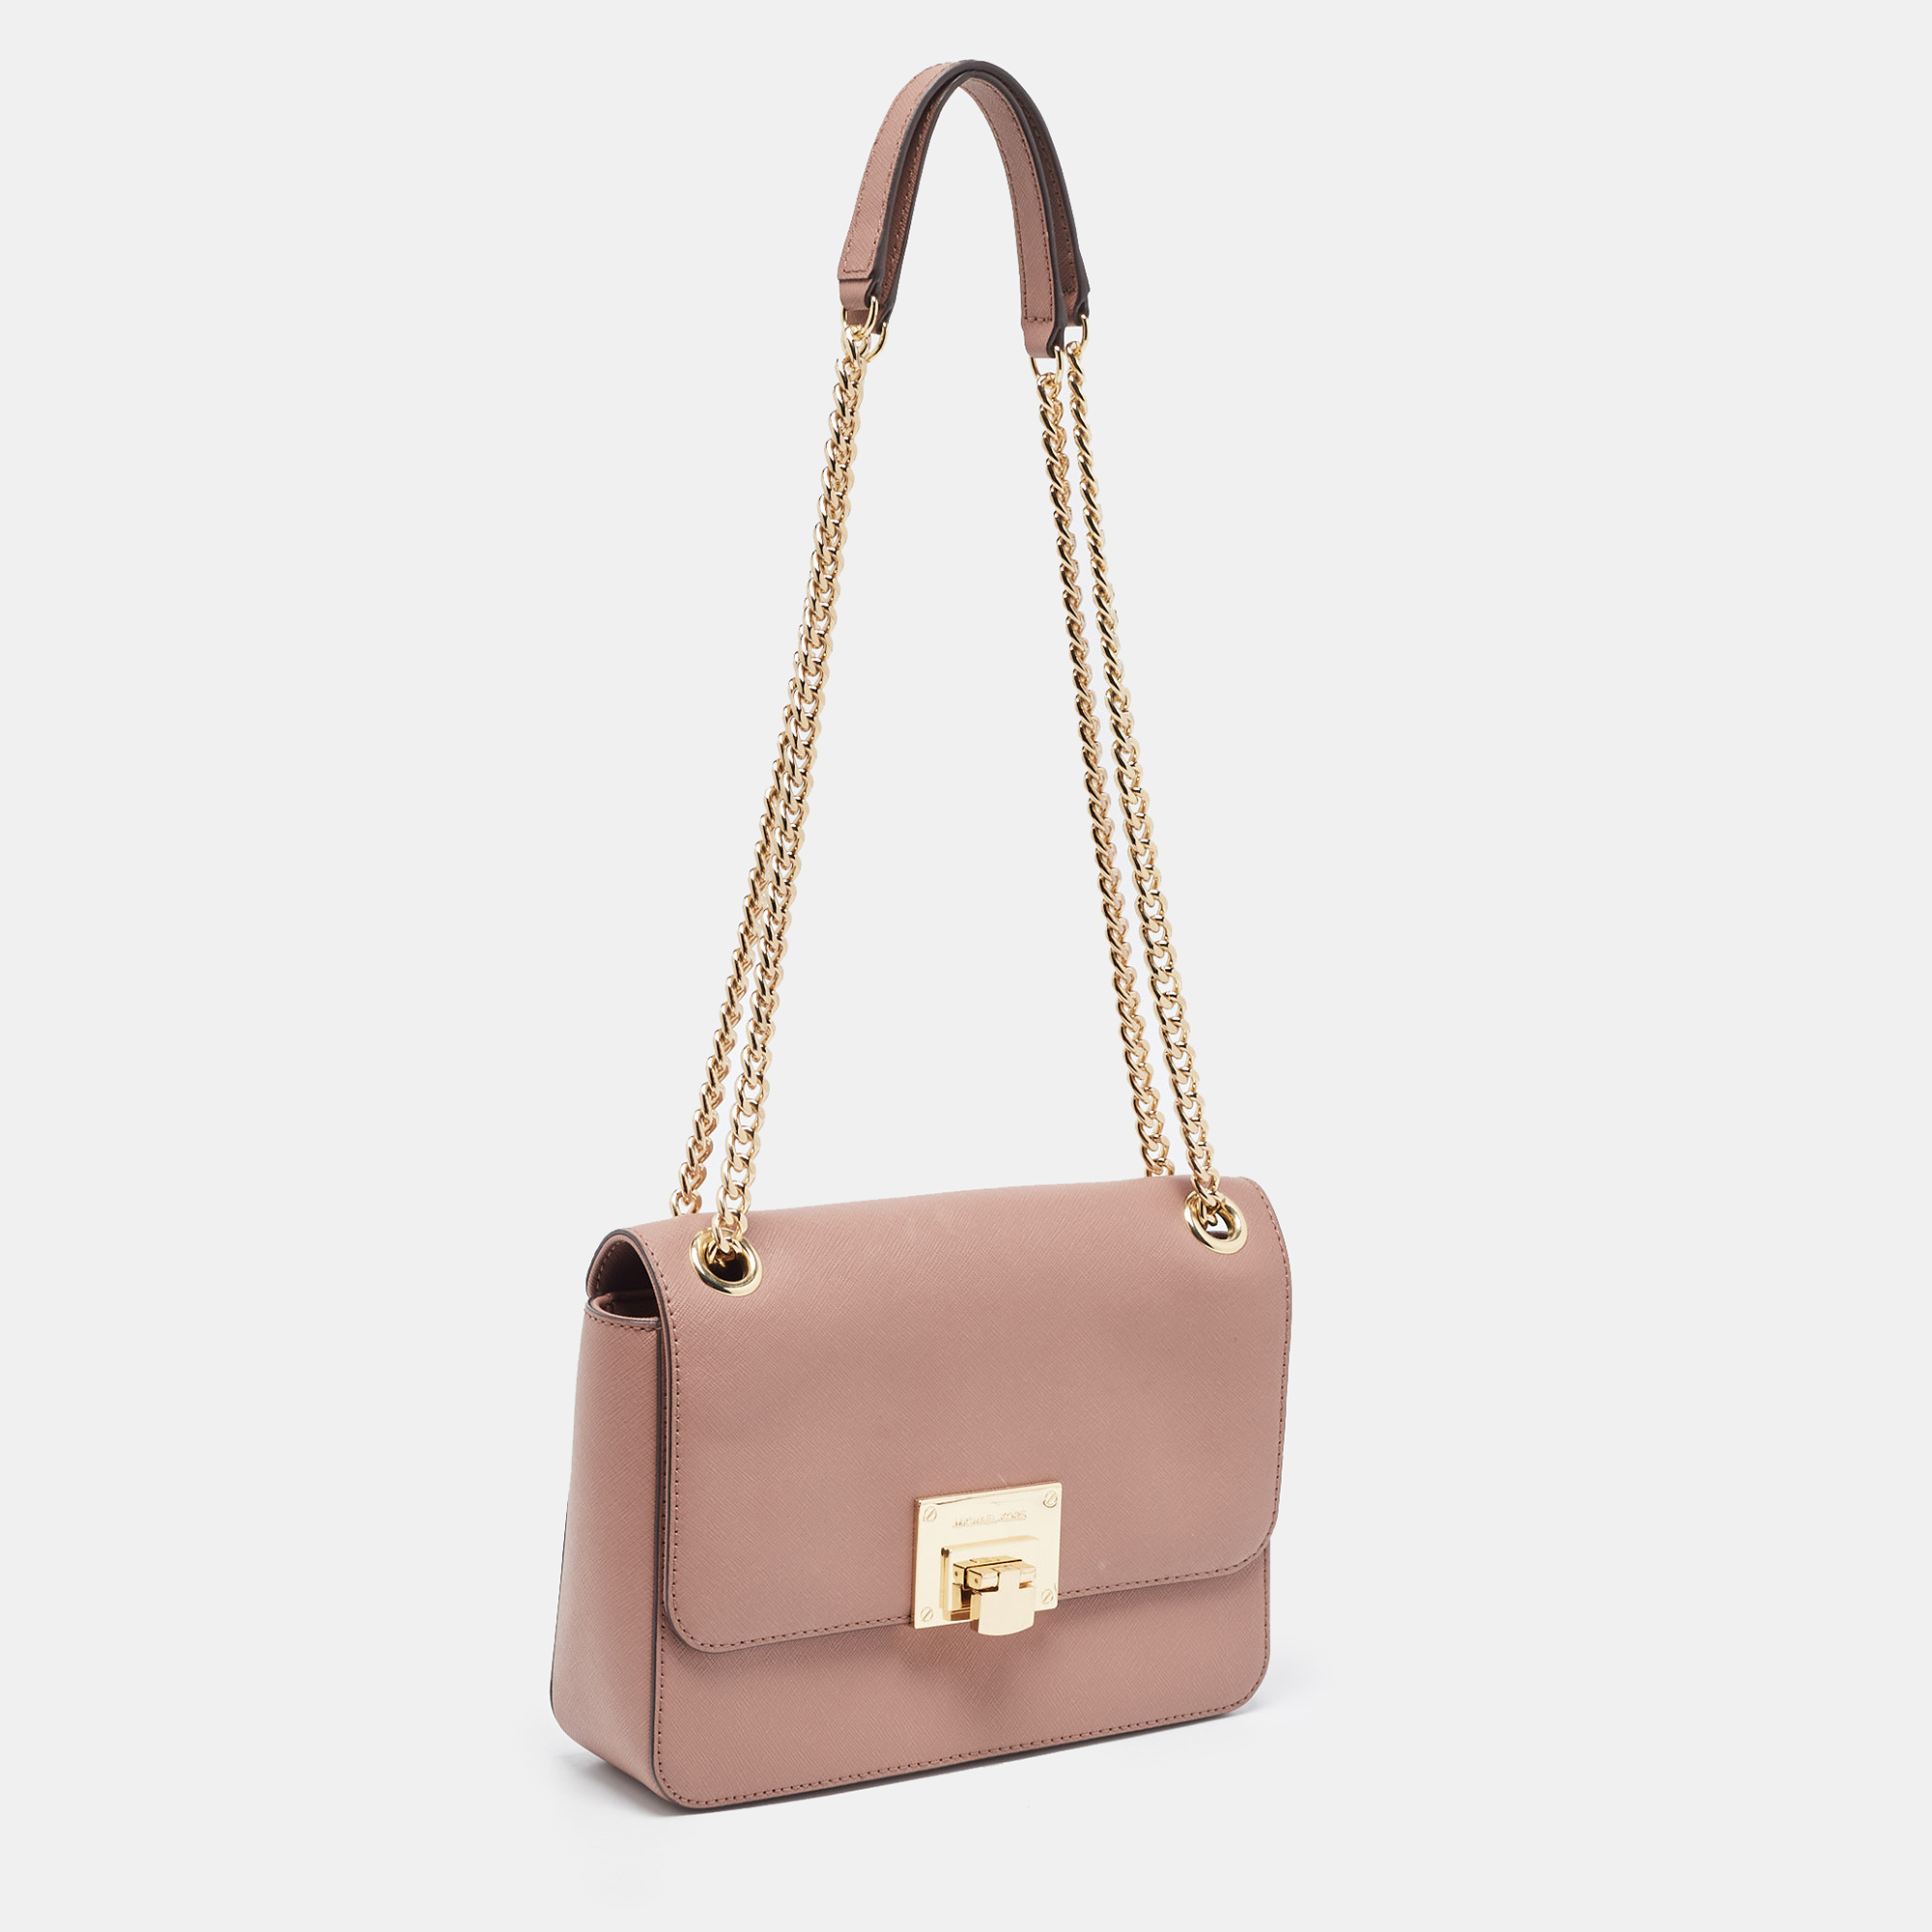 Michael Kors Pink Leather Tina Shoulder Bag